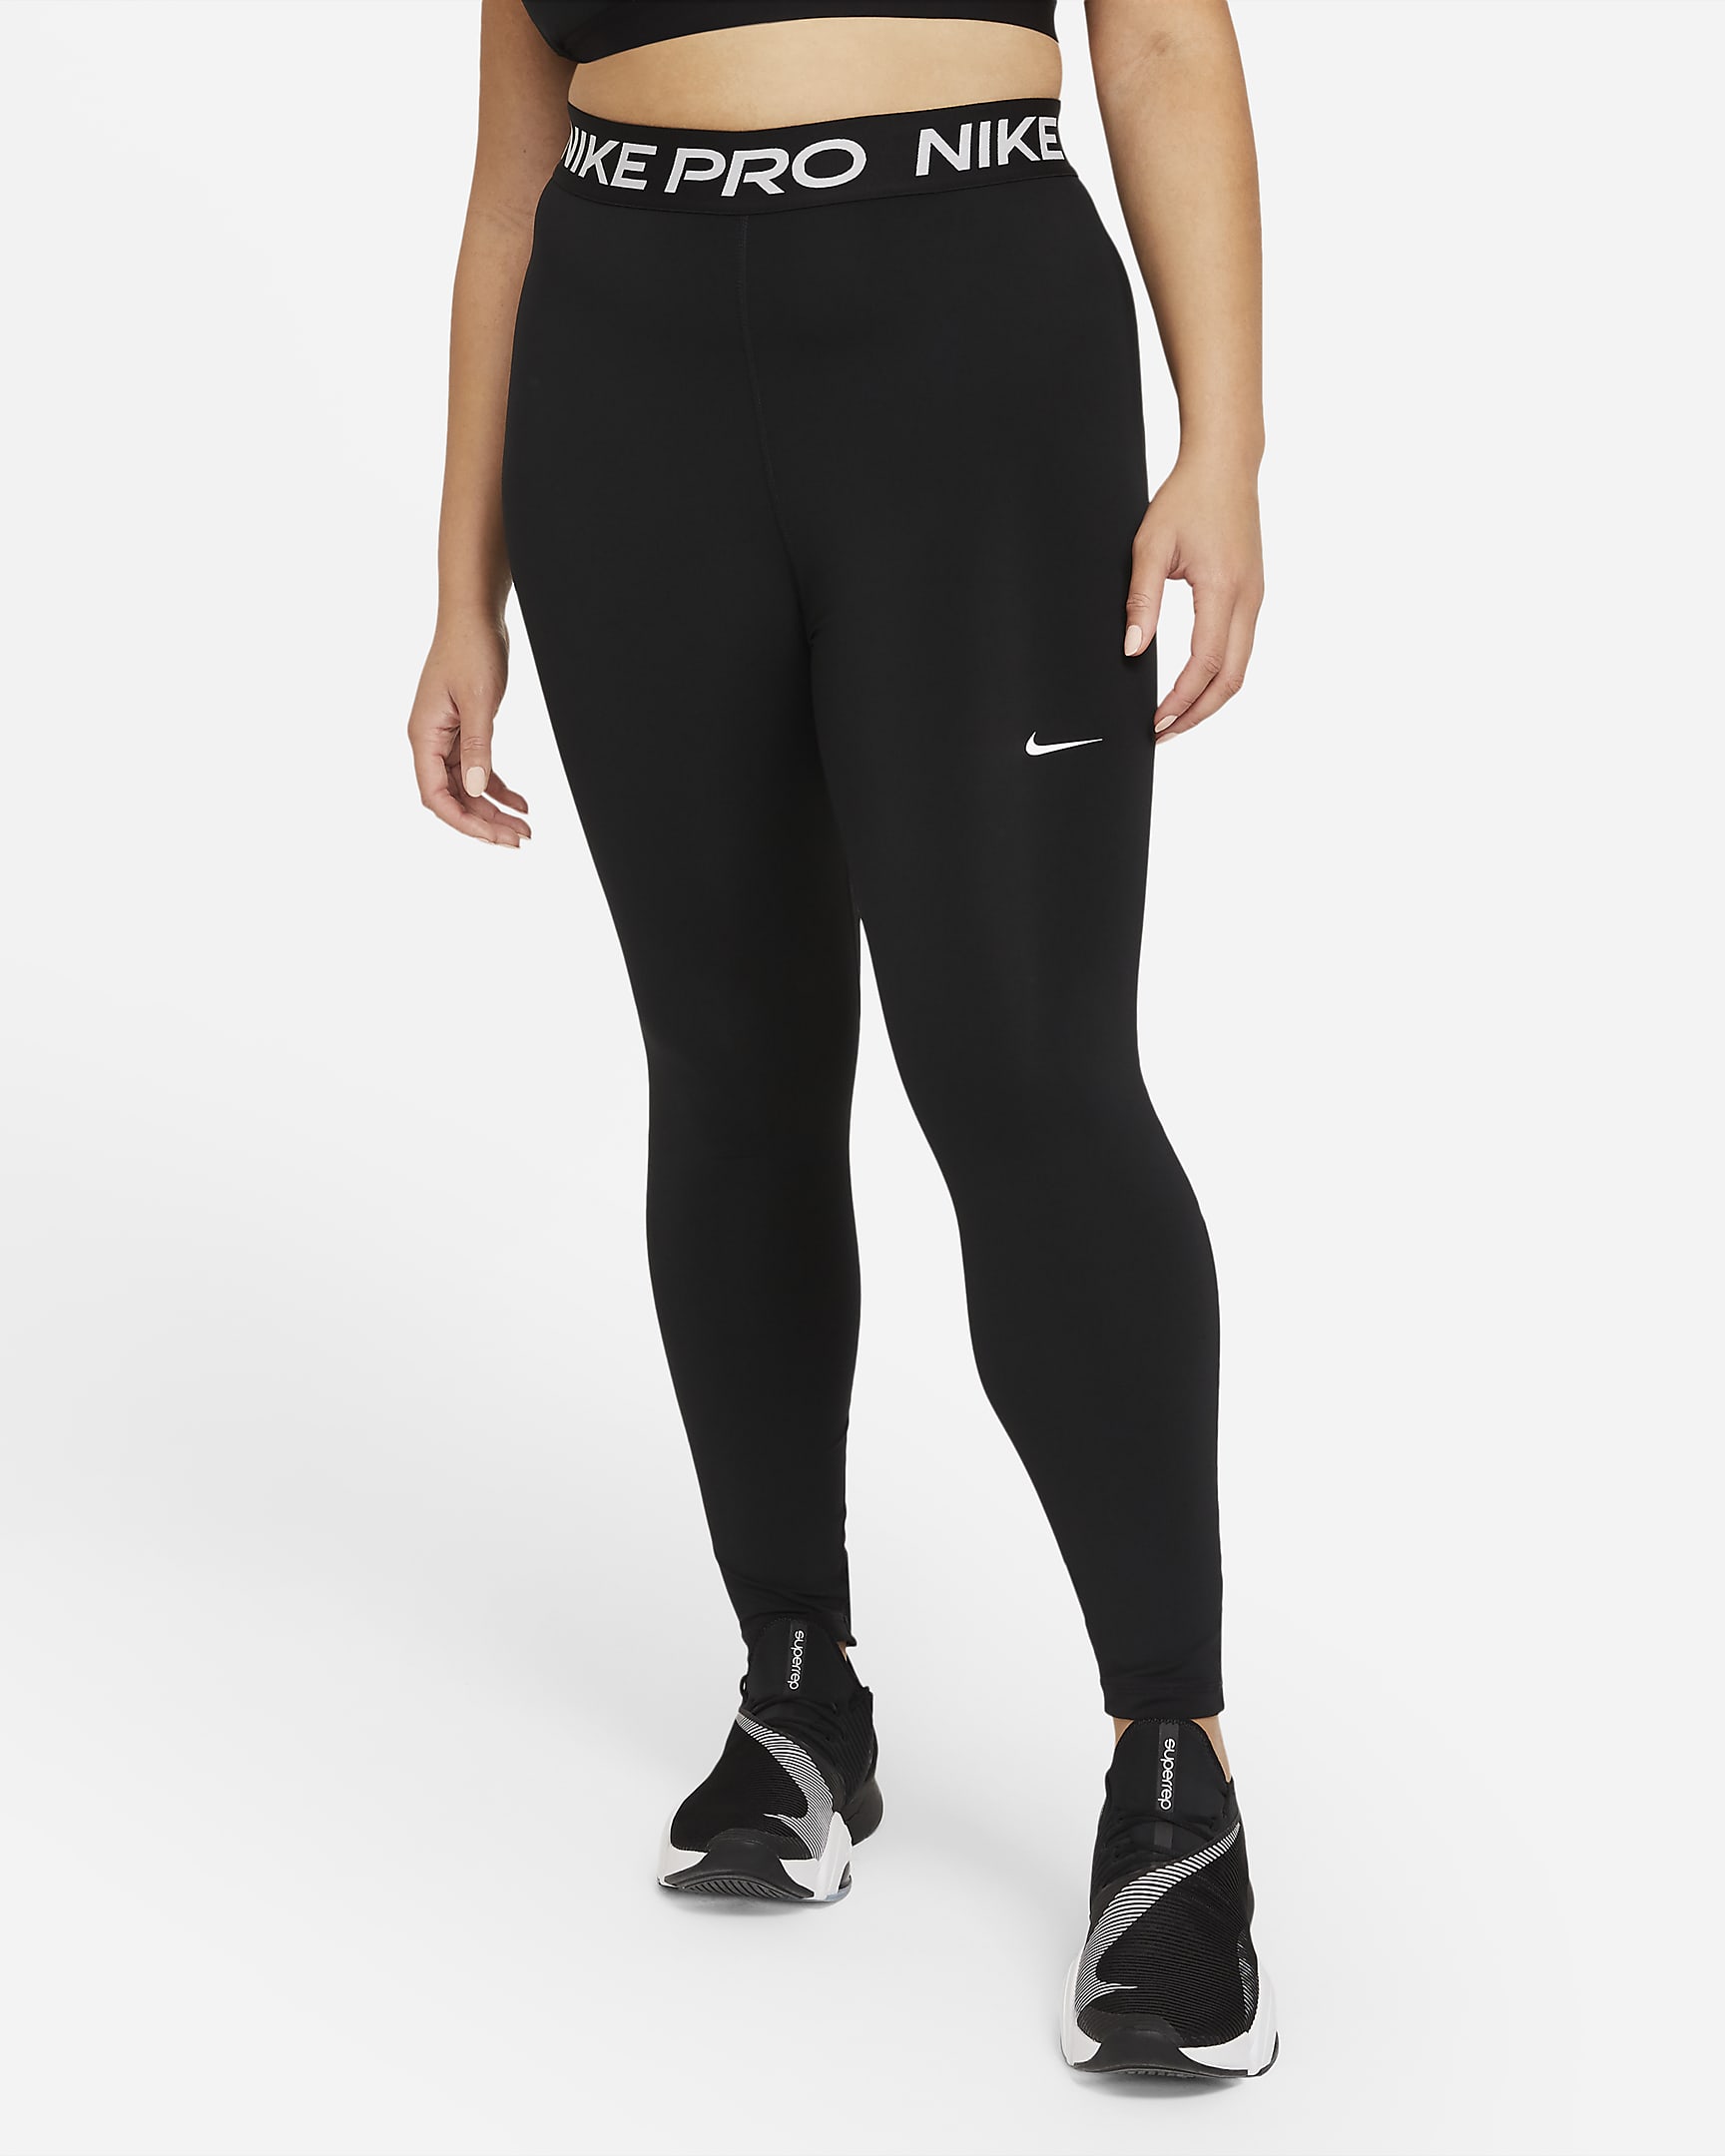 Nike Pro 365 Leggings (Talla grande) - Mujer - Negro/Blanco